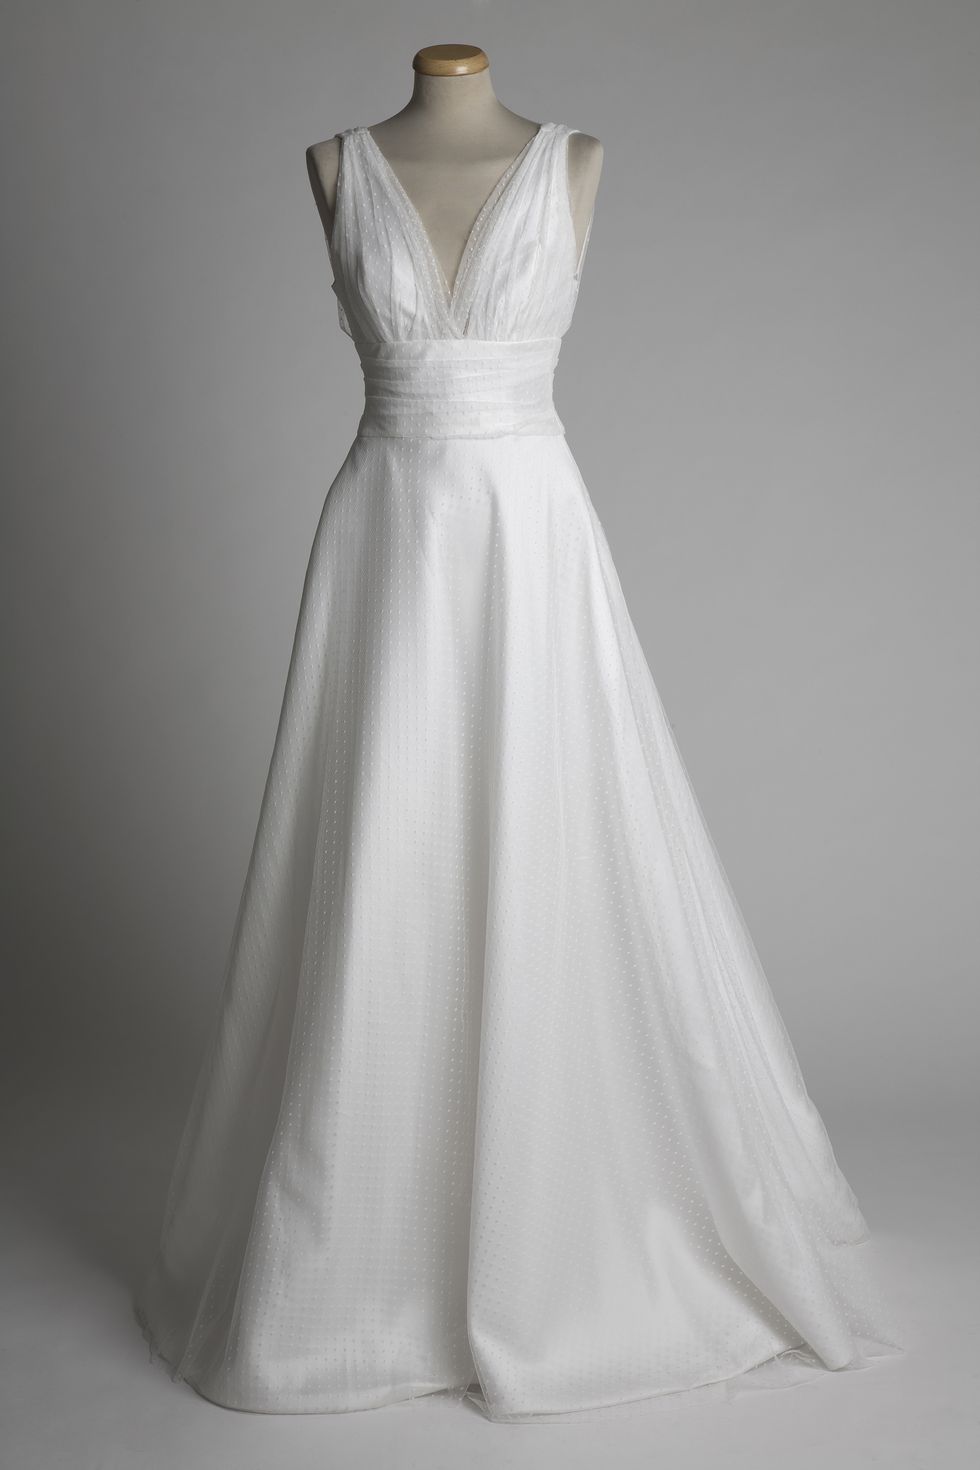 Dress, Textile, White, One-piece garment, Gown, Formal wear, Wedding dress, Style, Day dress, Fashion, 